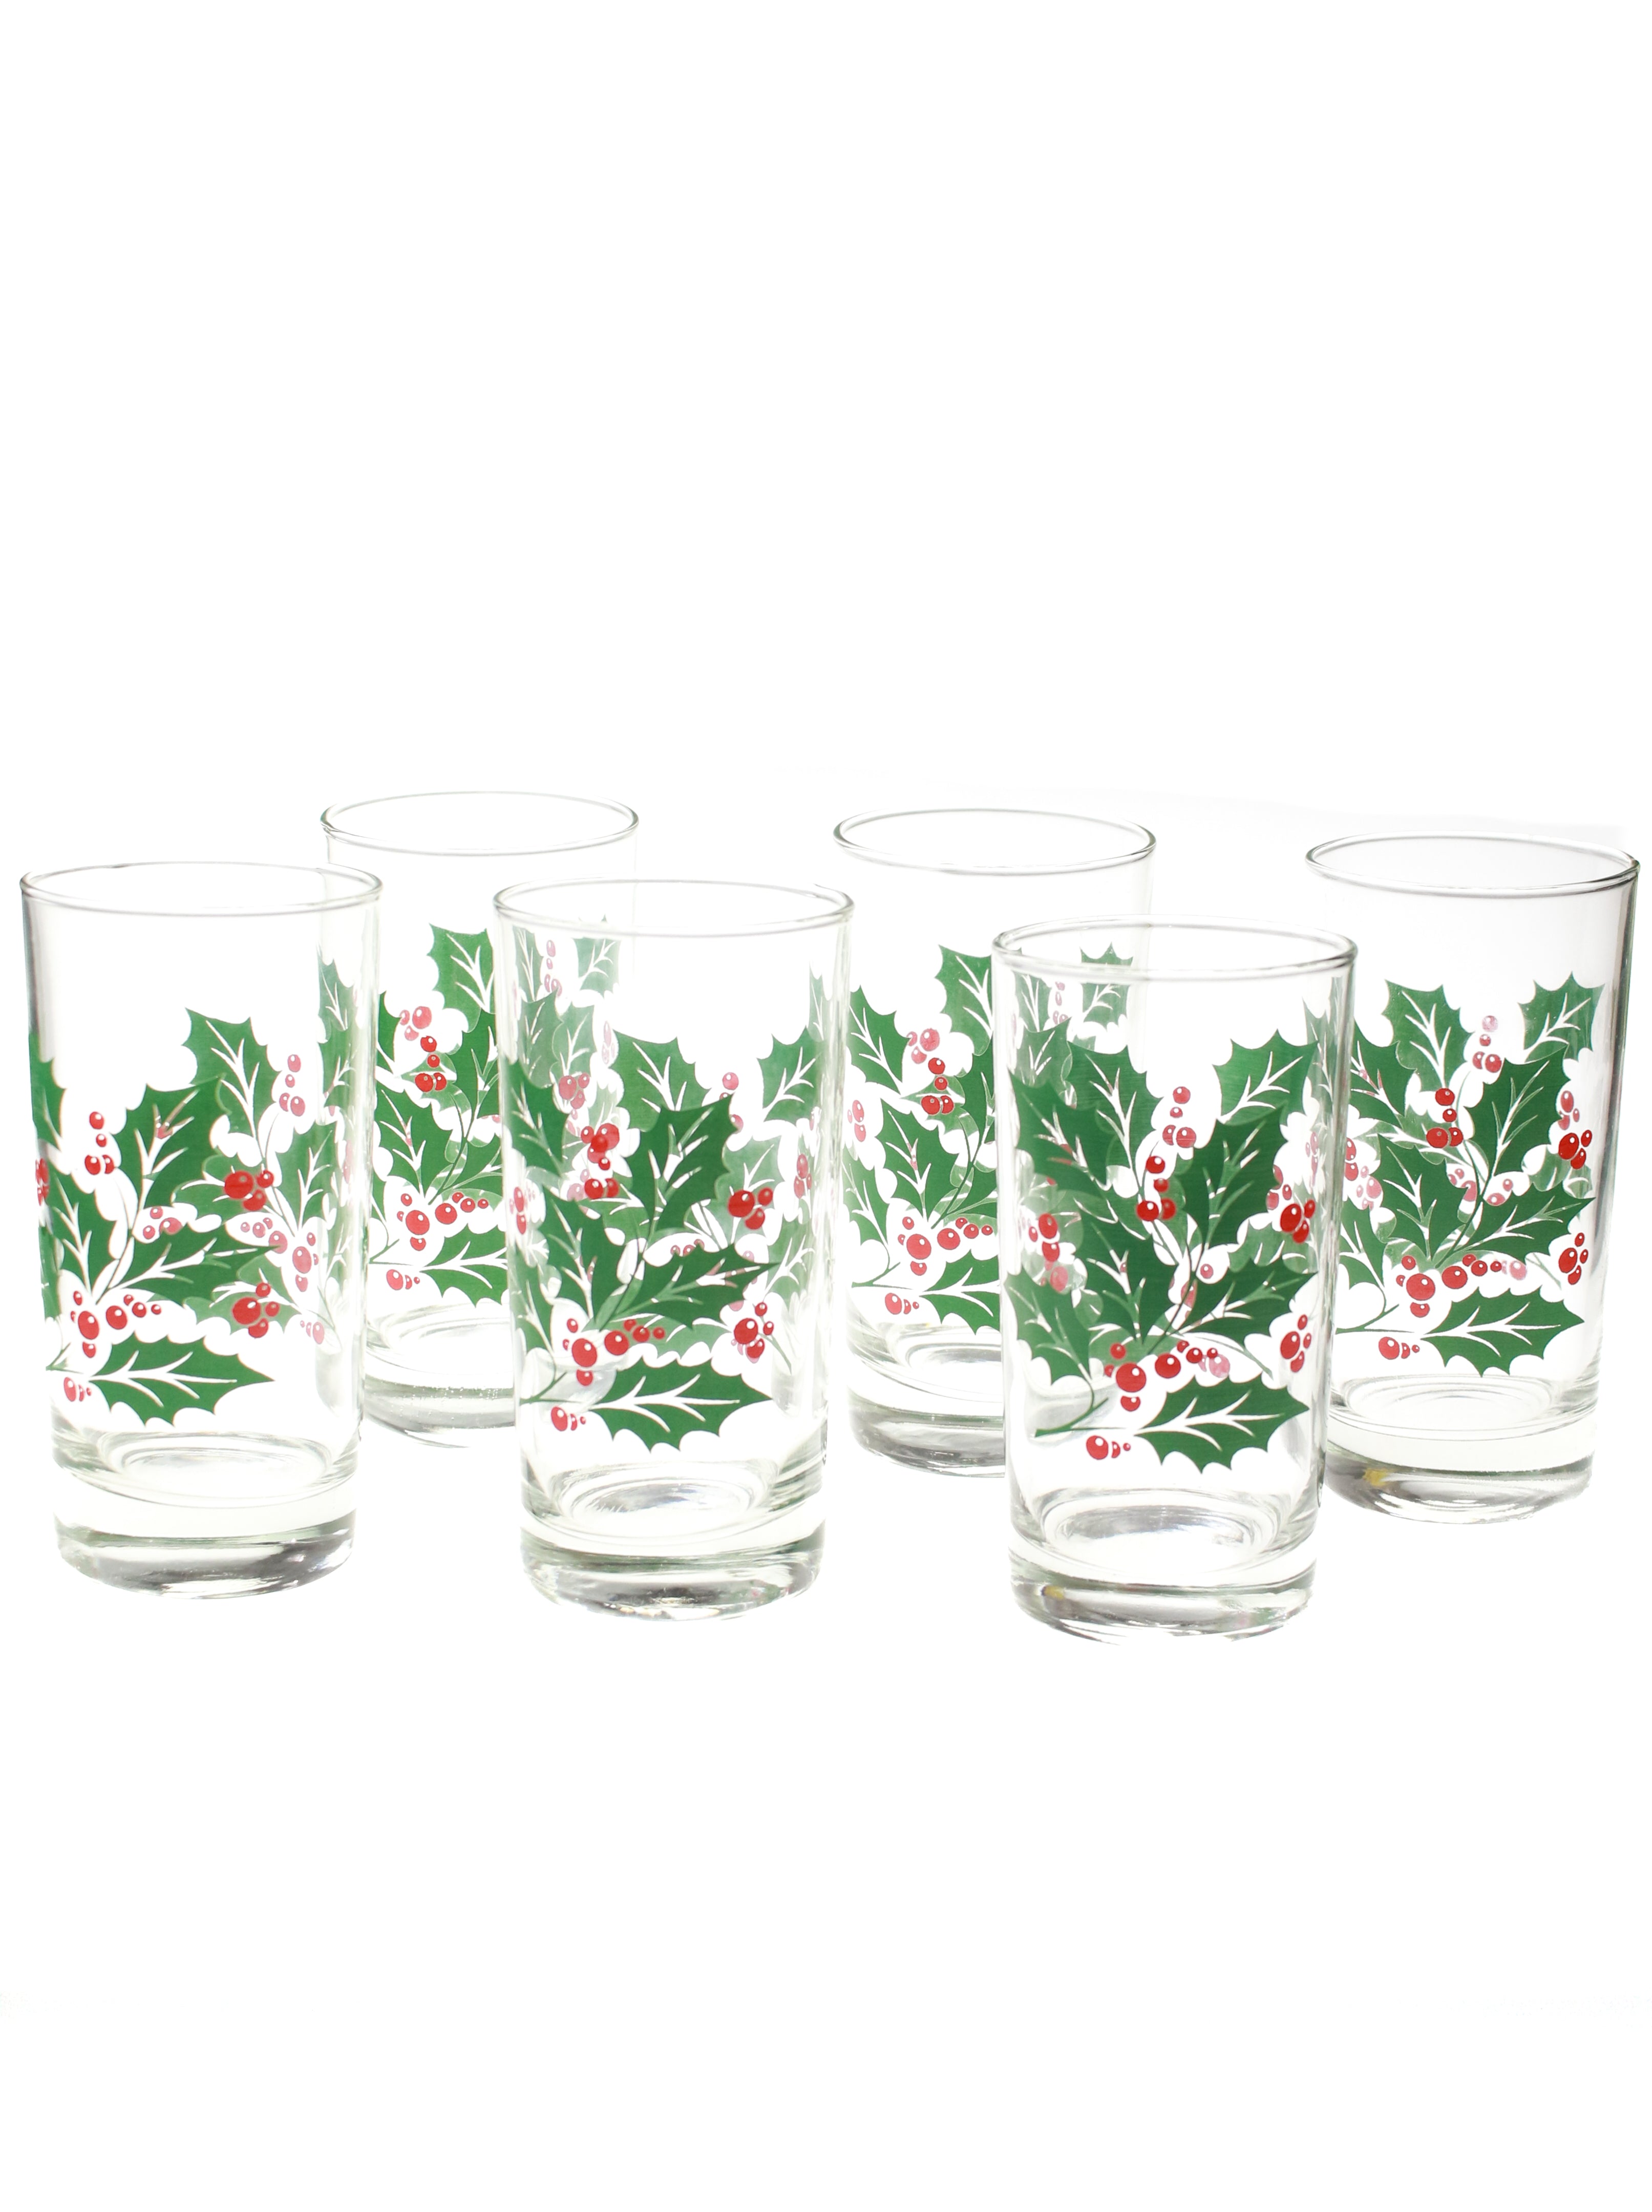 Vintage Holly Drinking Glasses- Set of 8